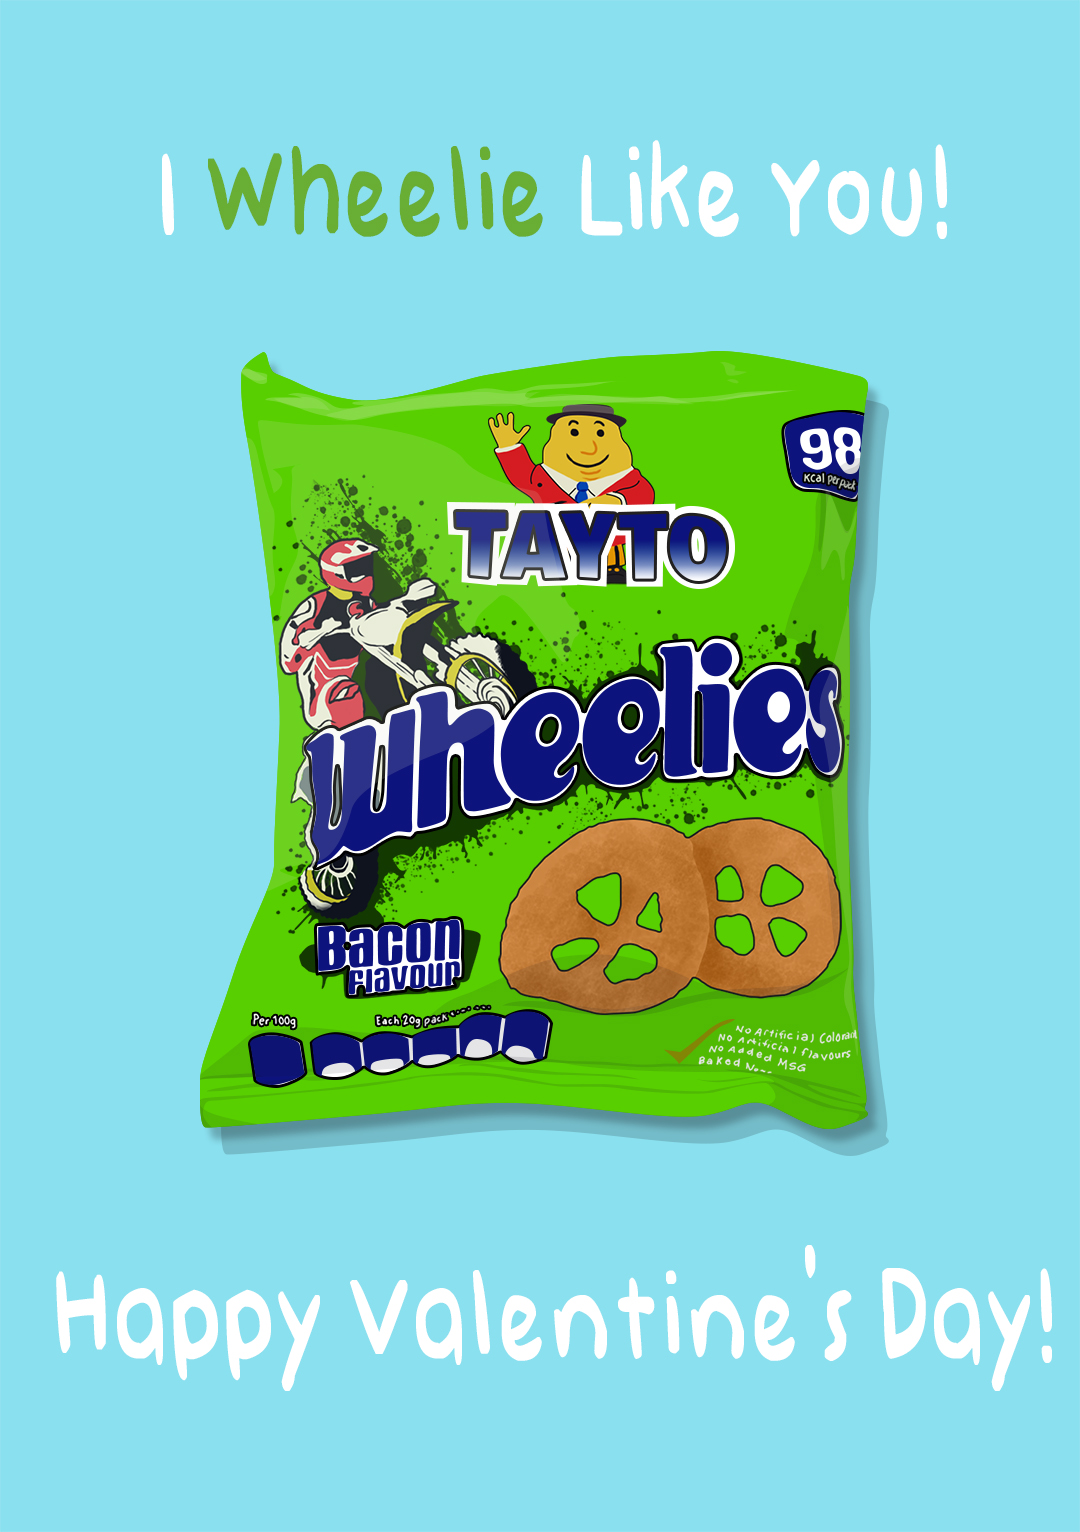 I Wheelie Like You... - Wheelies Crisps Inspired Valentine's Card